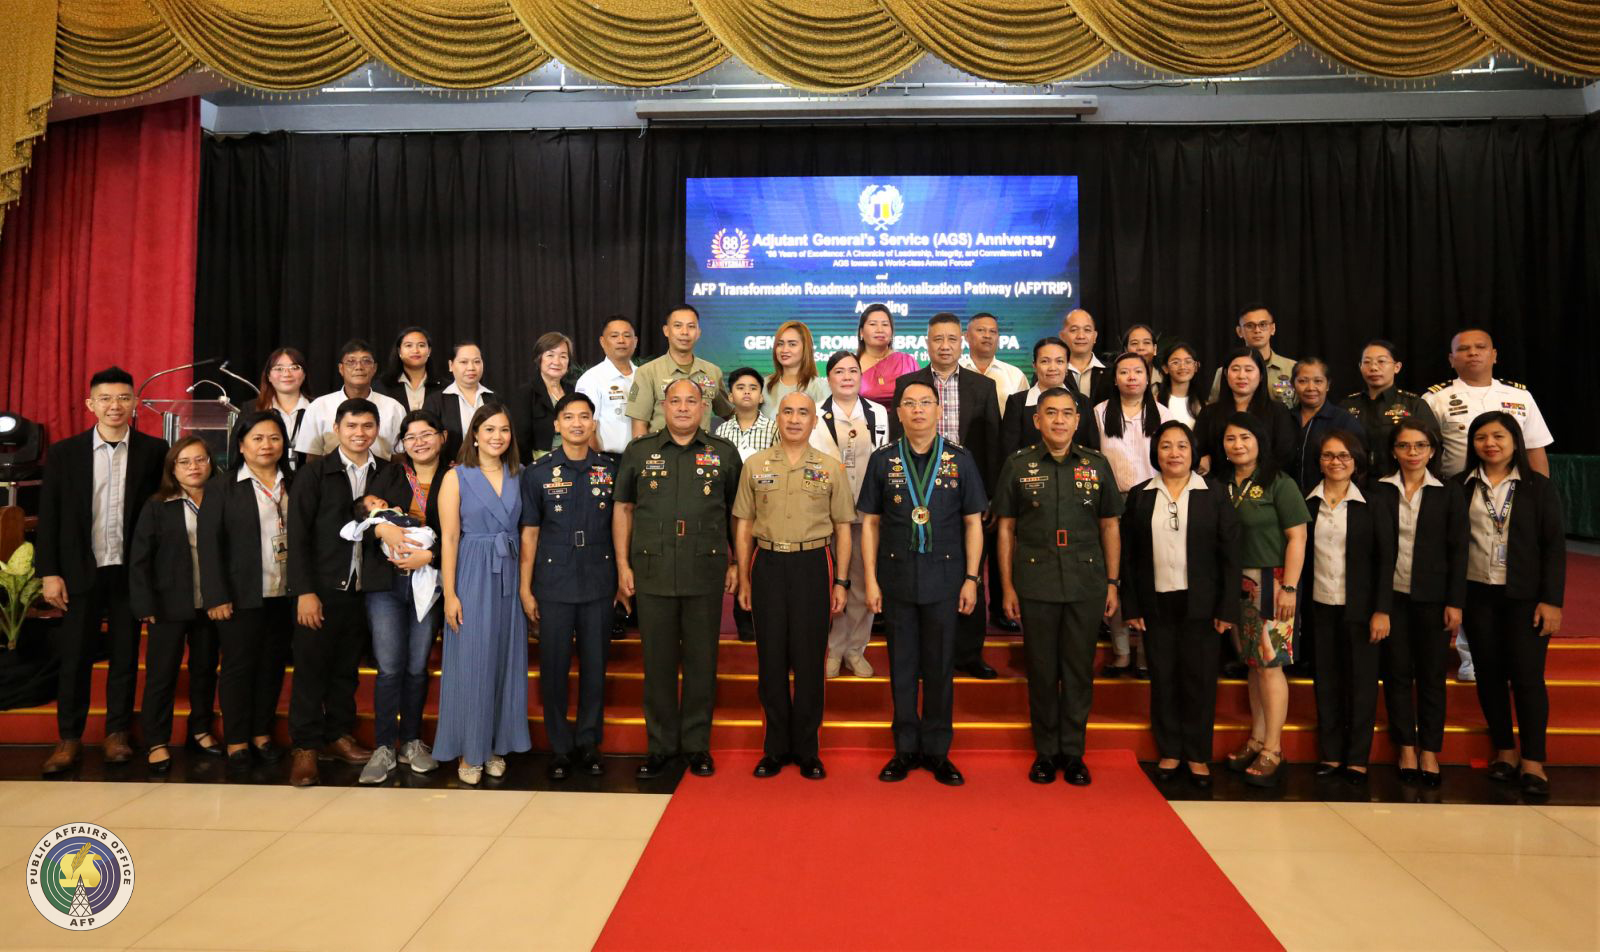 AFP Adjutant General’s Service celebrates 88 Years of Service